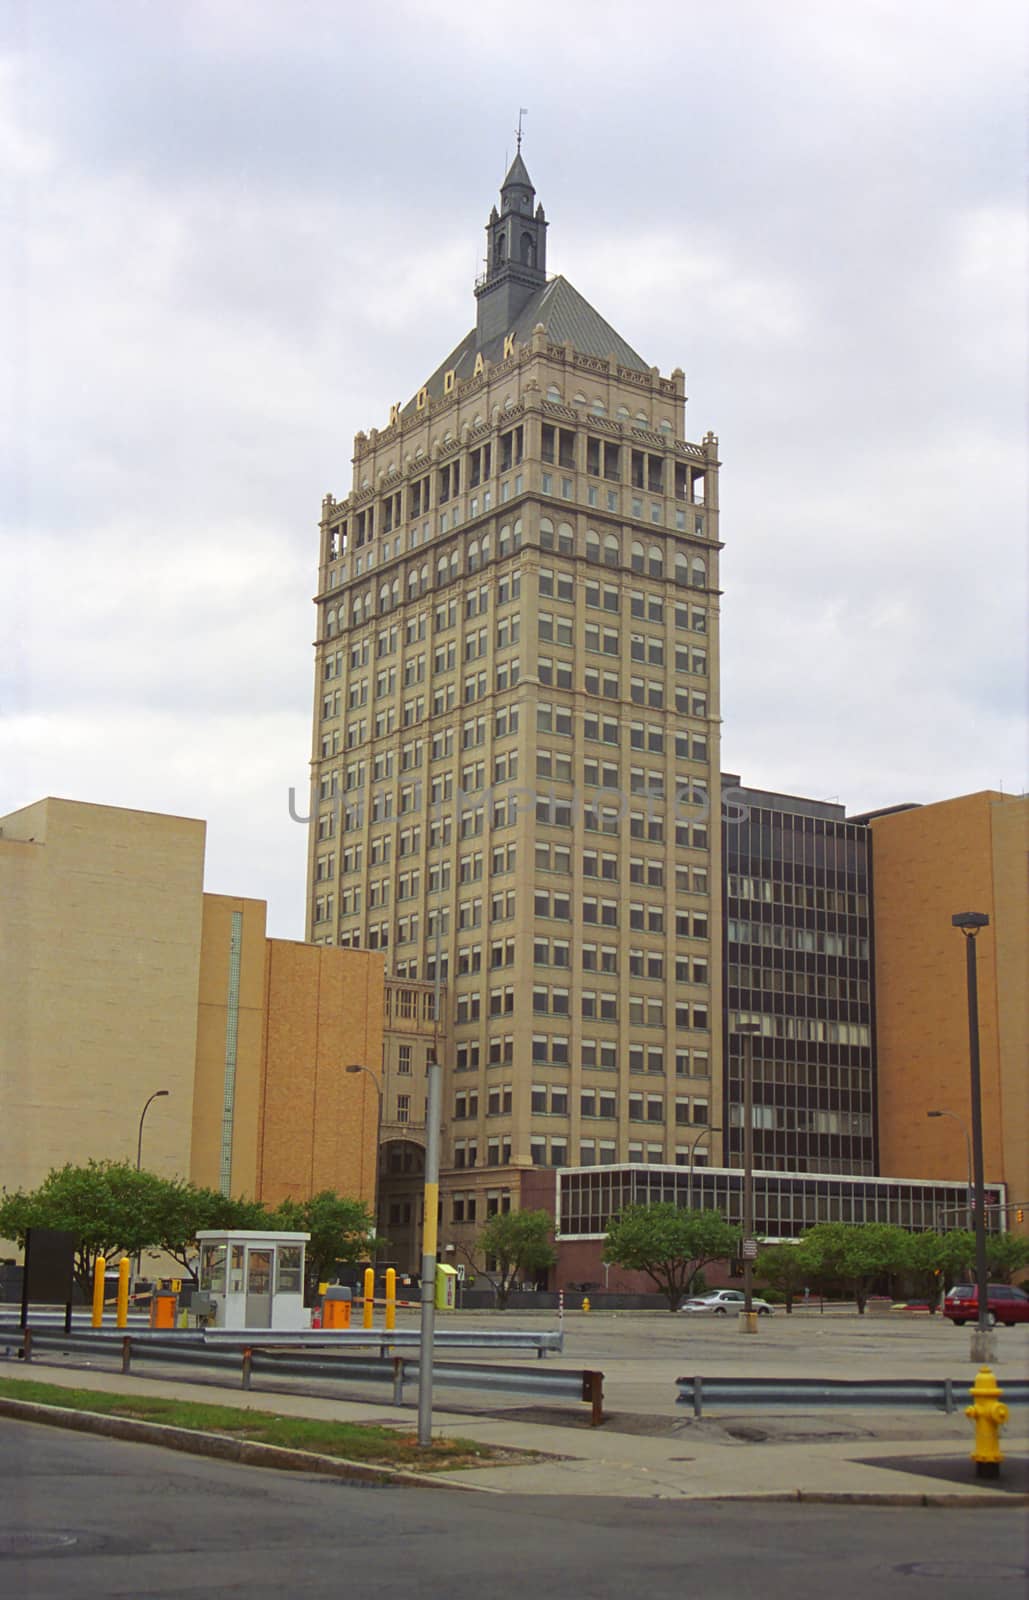 Kodak Building in Rochester, New York. Headquarters for the Eastman Kodak company.